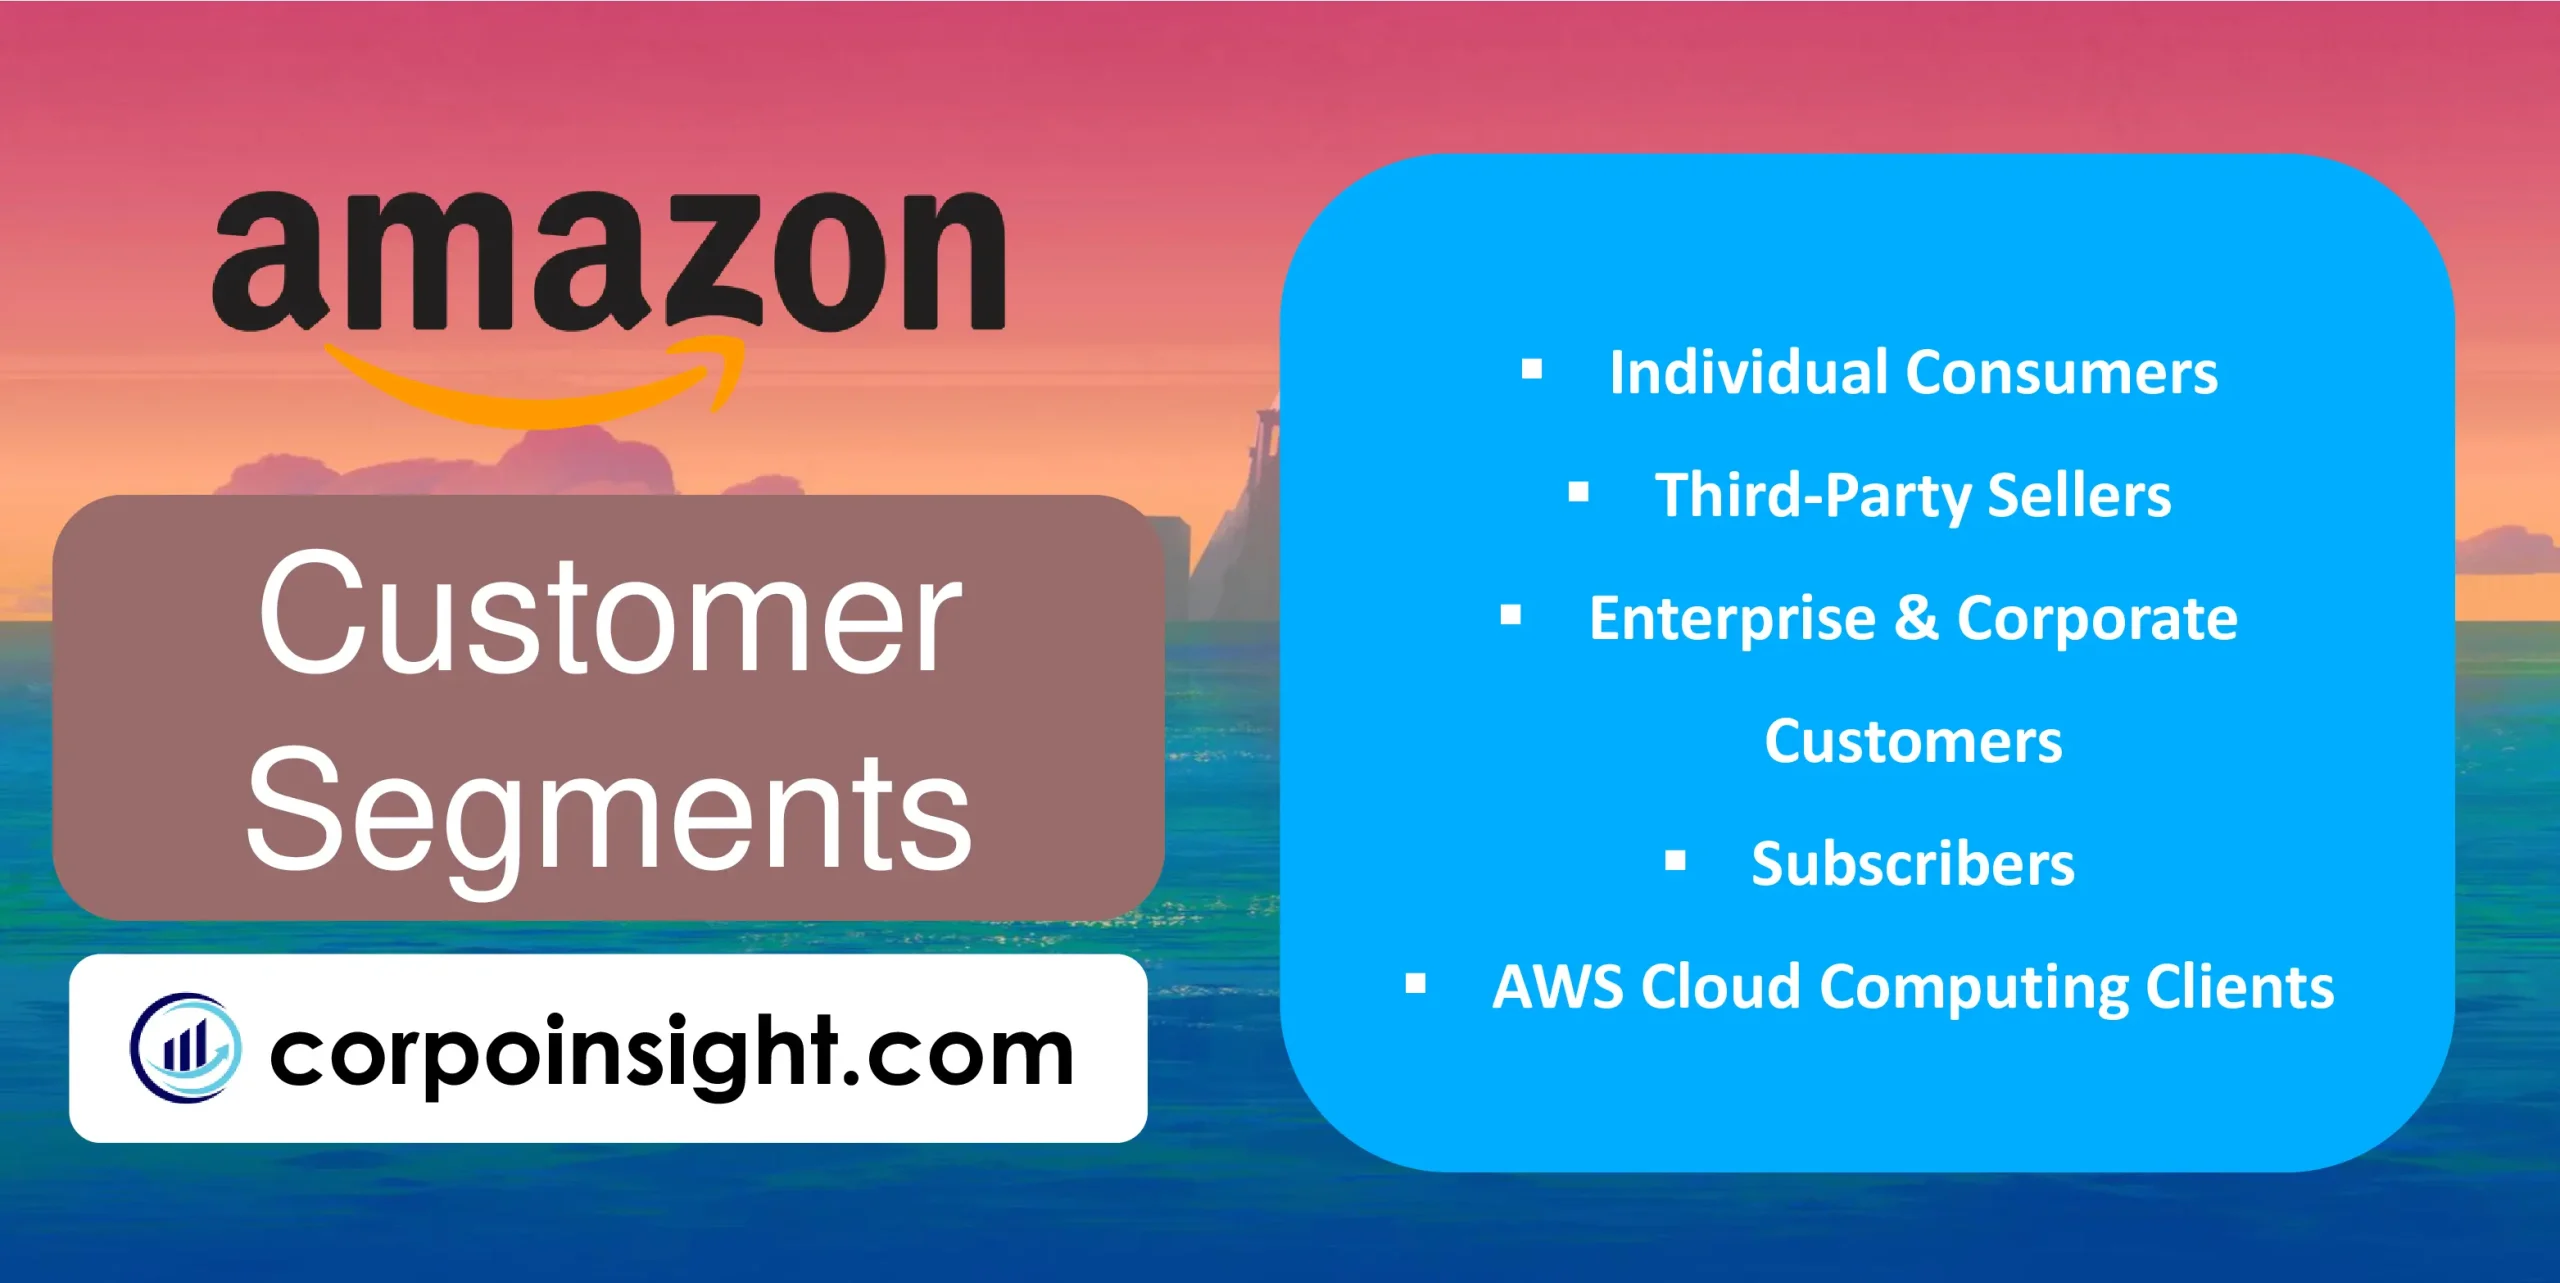 Customer Segments of Amazon